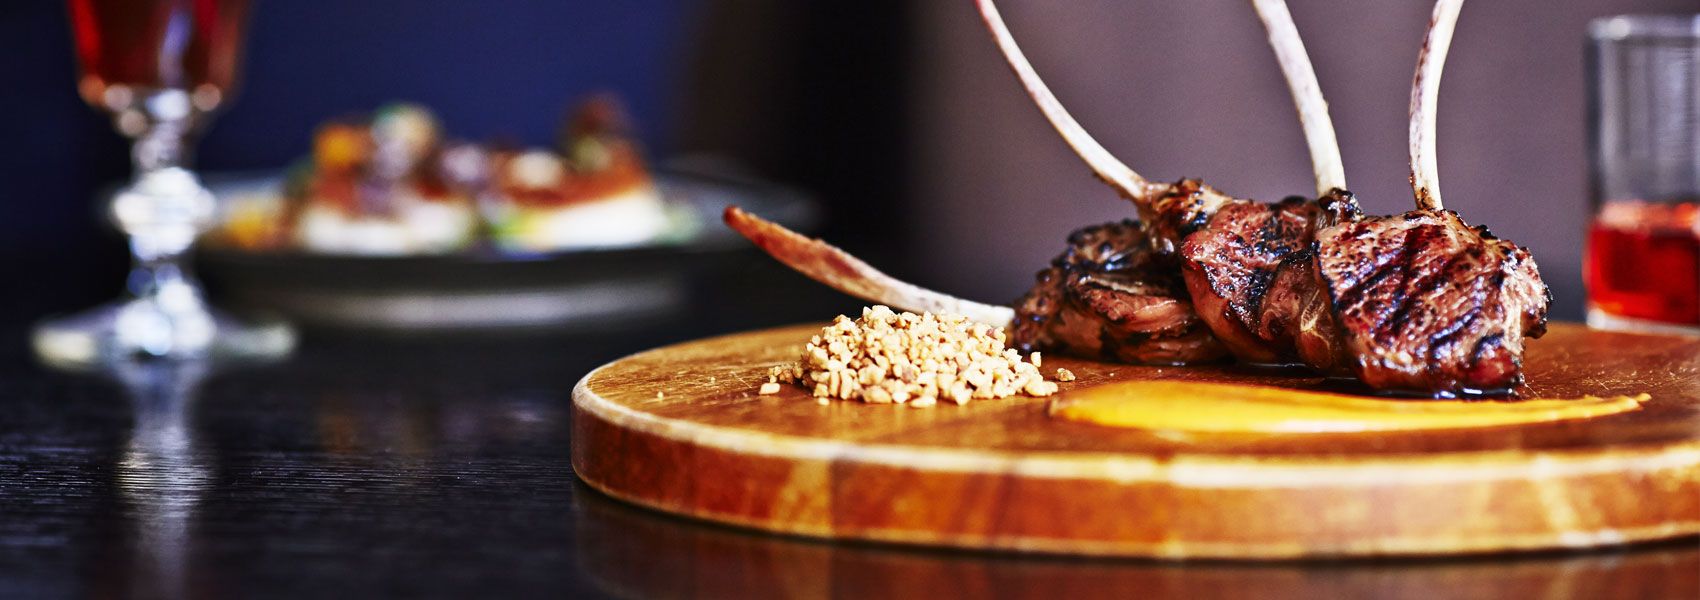 a juicy steak on a cutting board